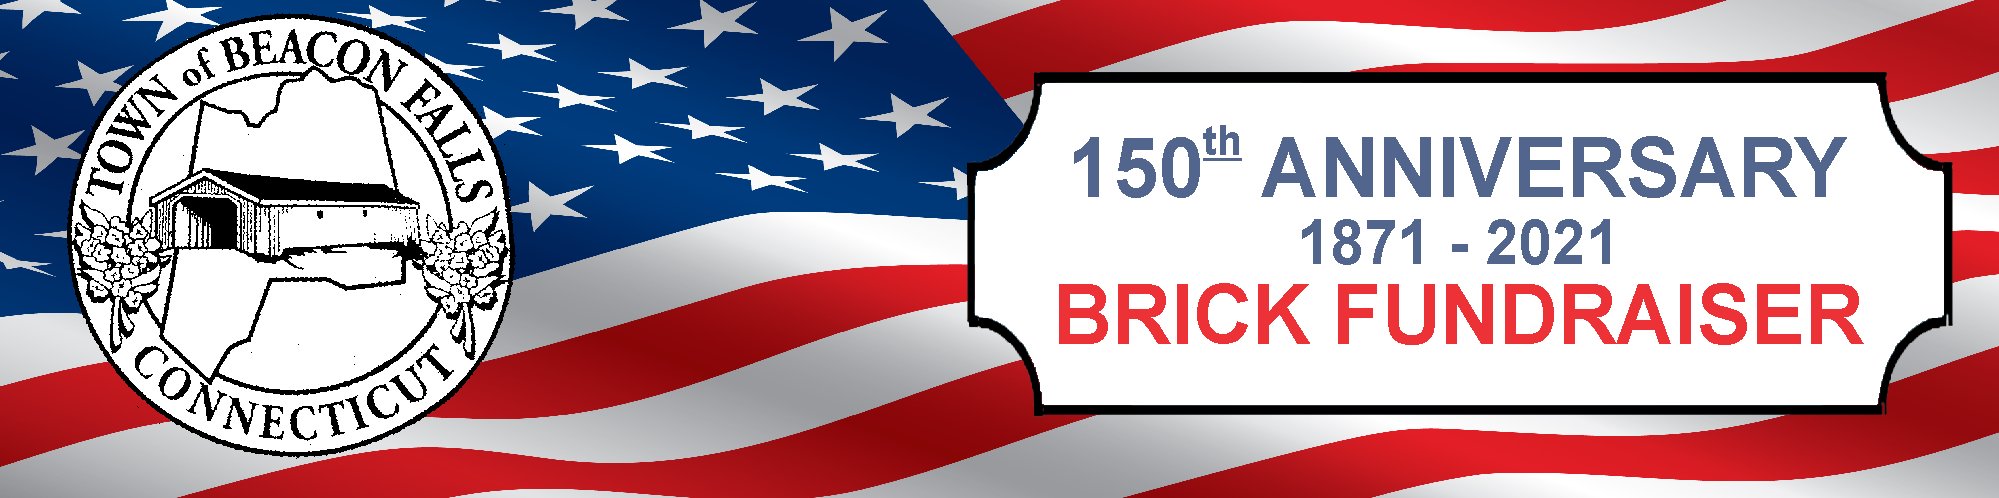 Town of Beacon Falls 150th Anniversary Brick Fundraiser